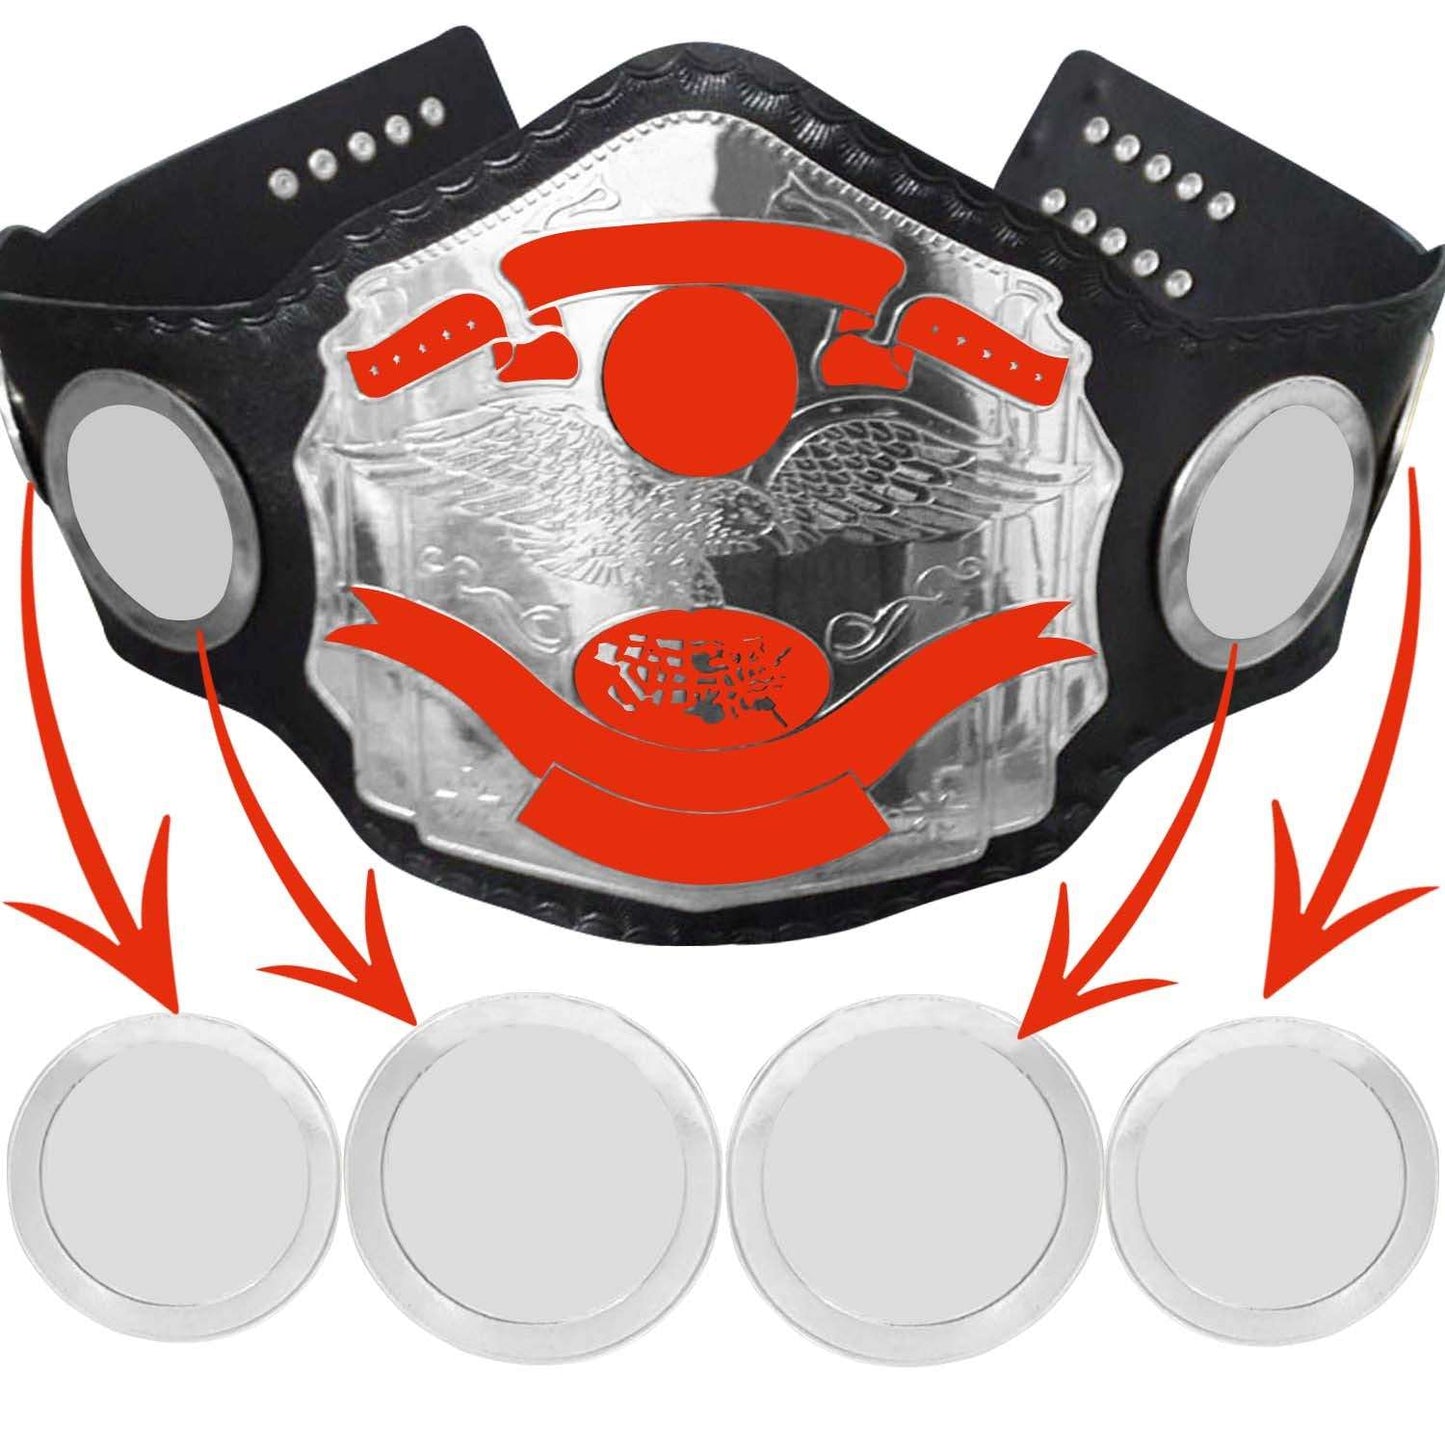 NWA Championship Belt